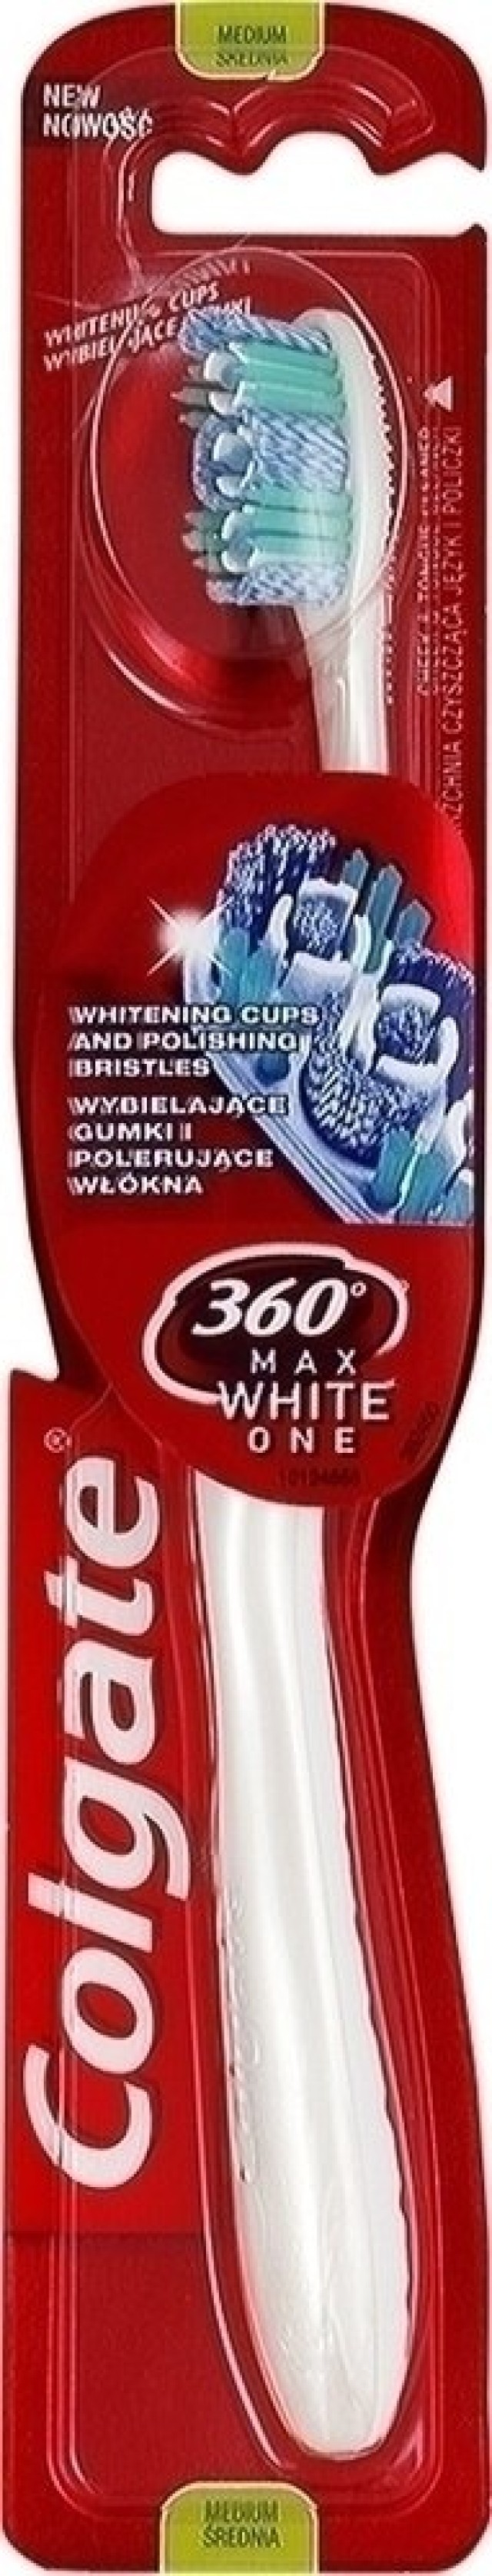 Colgate 360 Max White One, Οδοντόβουρτσα Medium